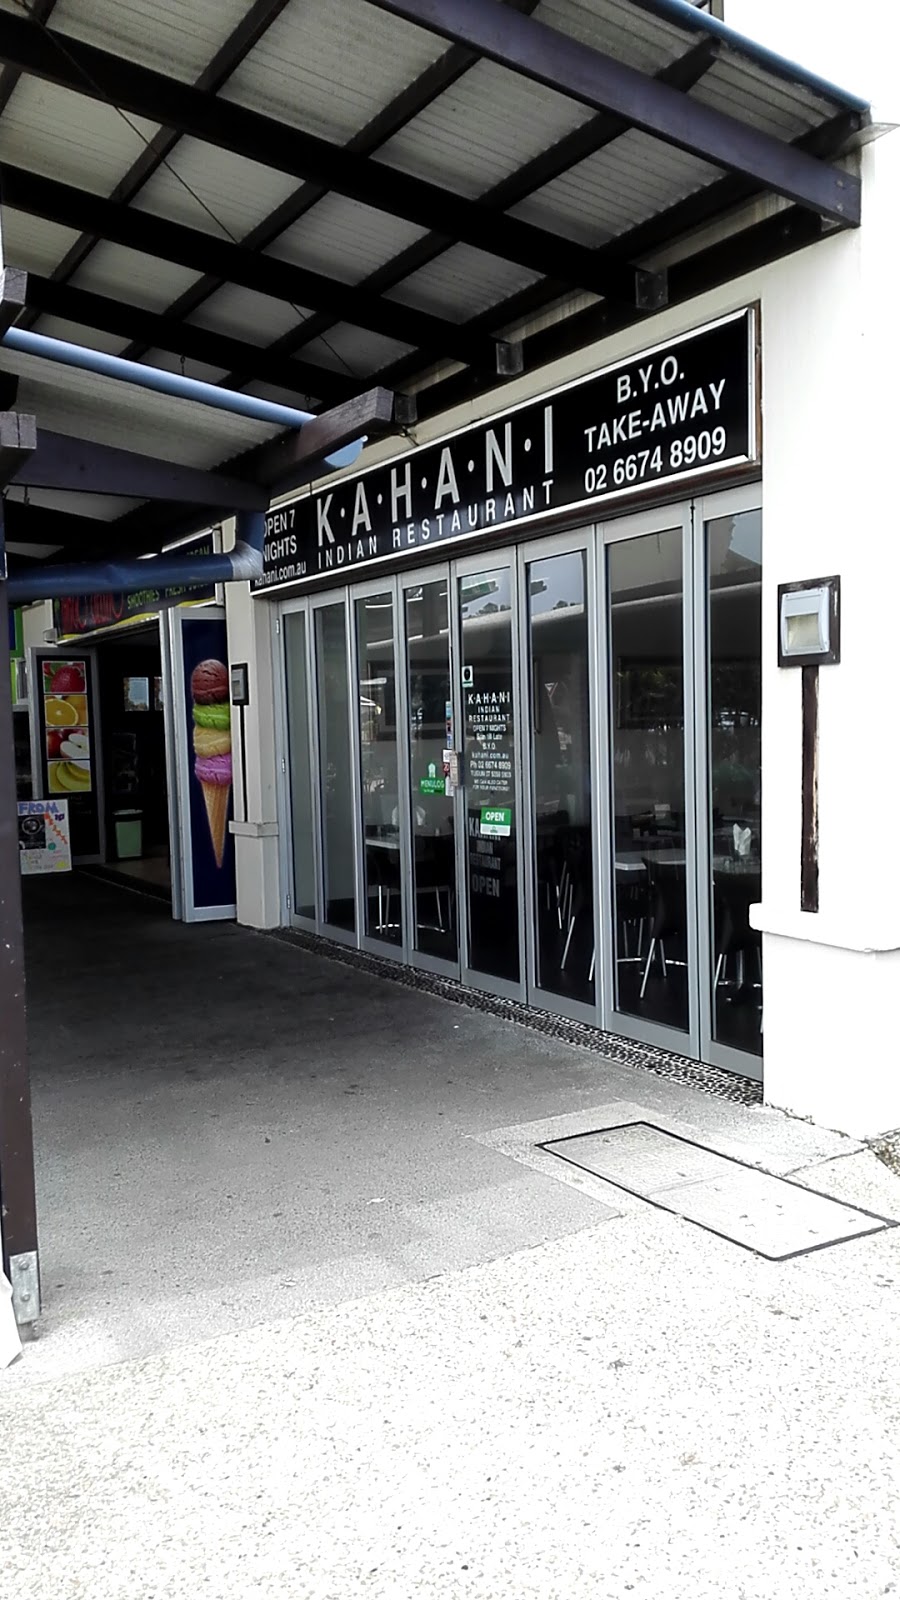 Kahani Indian Restaurant | restaurant | 5/78 Marine Parade, Kingscliff NSW 2487, Australia | 0266748909 OR +61 2 6674 8909